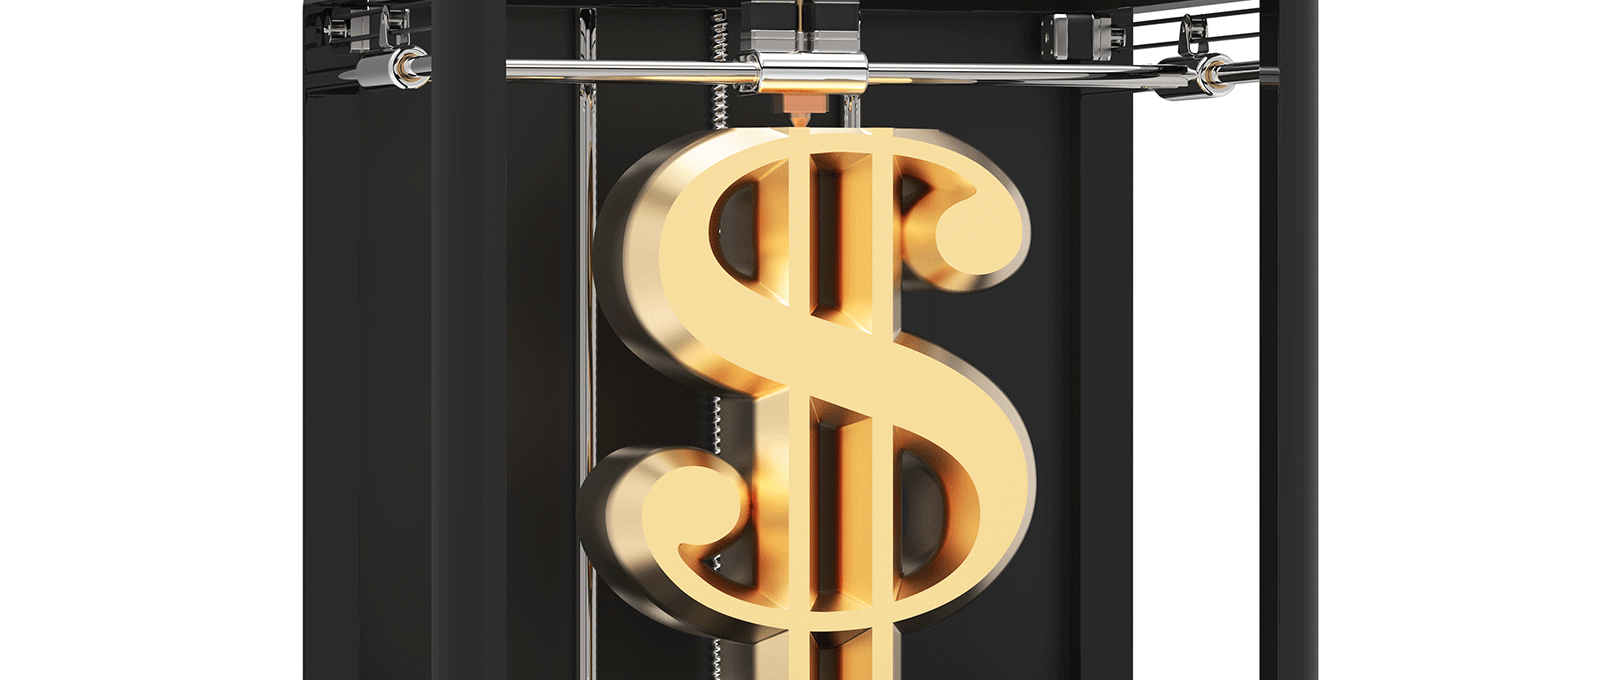 A 3D printer printing a golden $ sign.